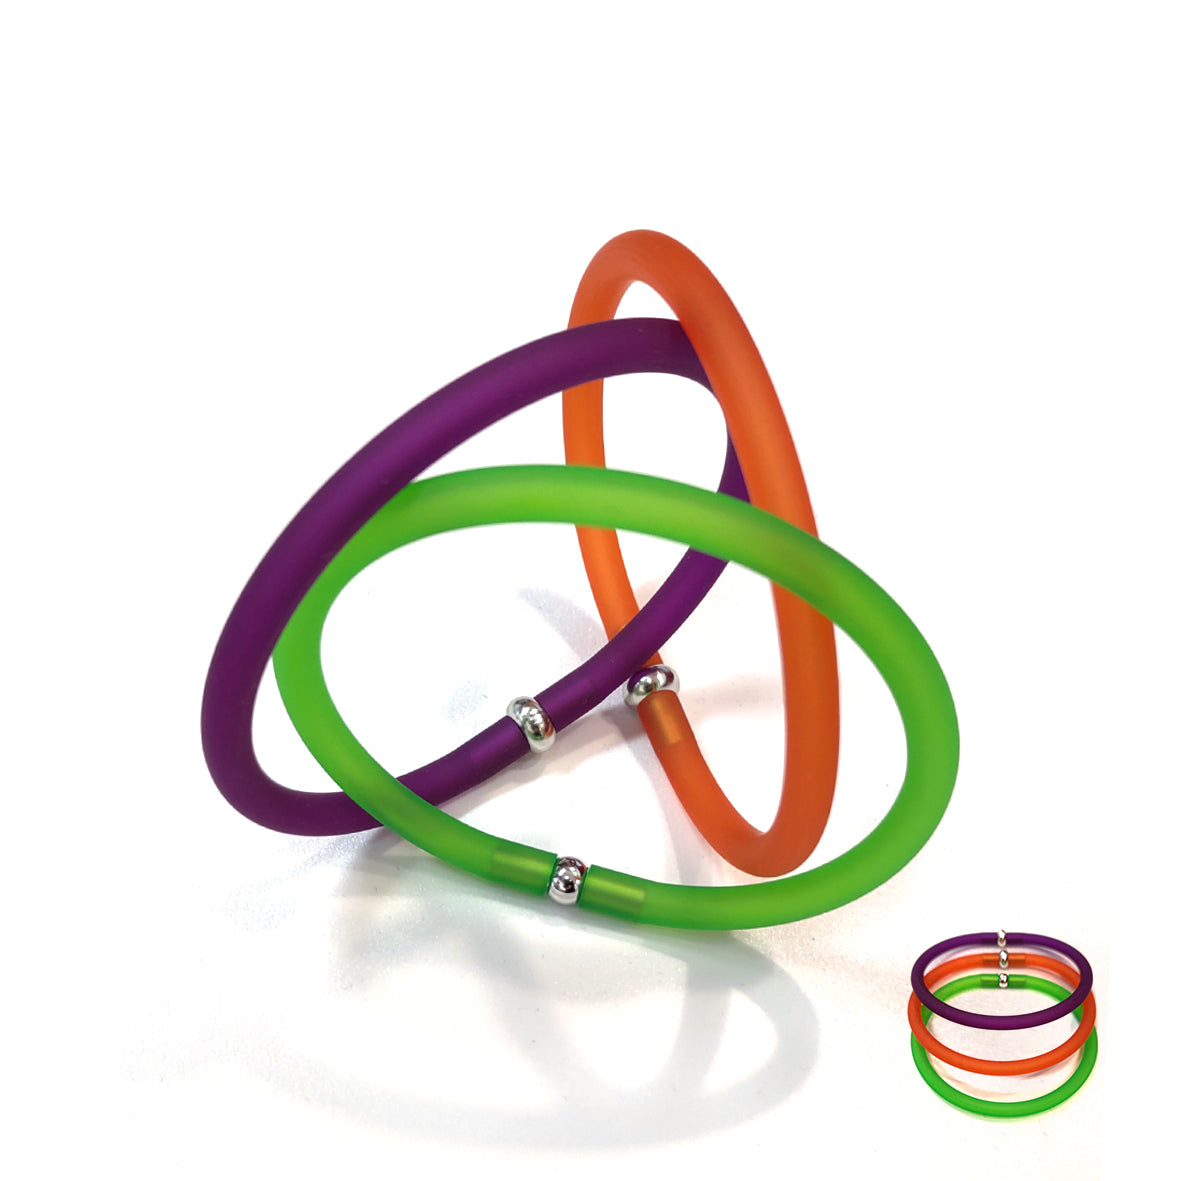 Safari Trio set of 3 rubber bracelets in 12 colors